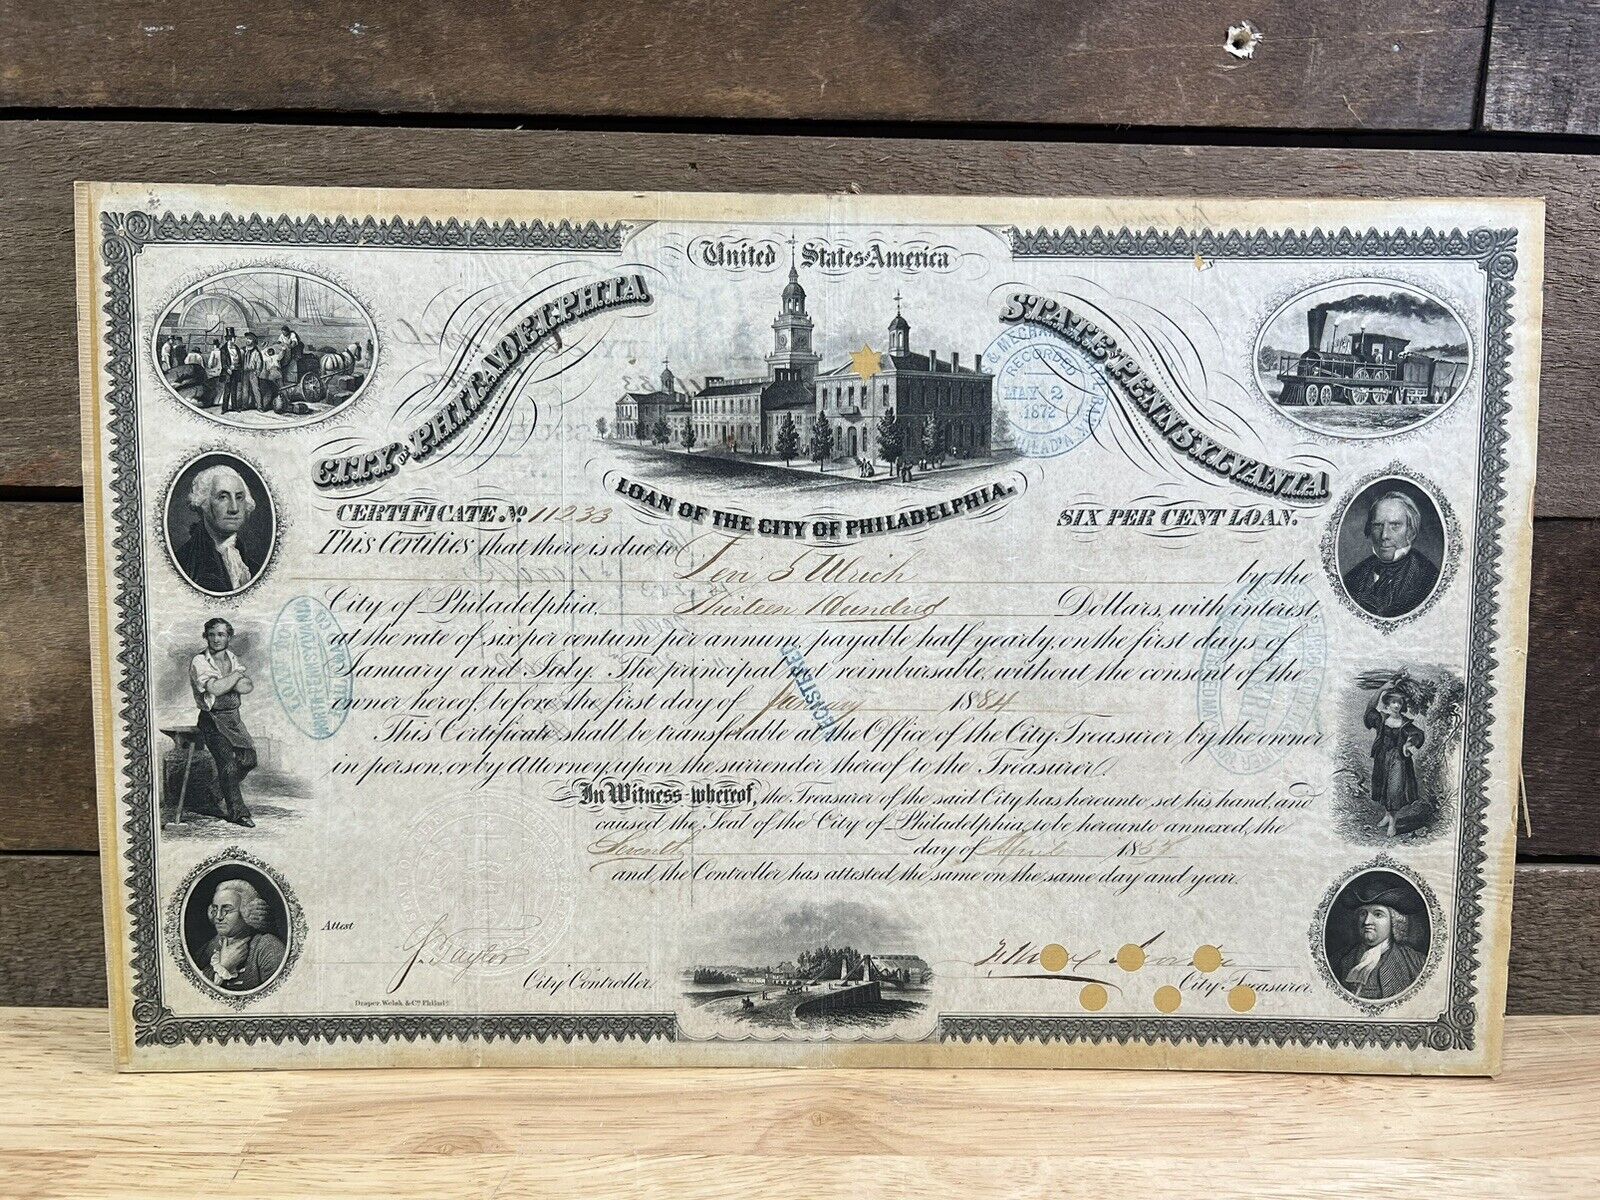 Antique 1884 Loan Of The City Of Philadelphia Certificate